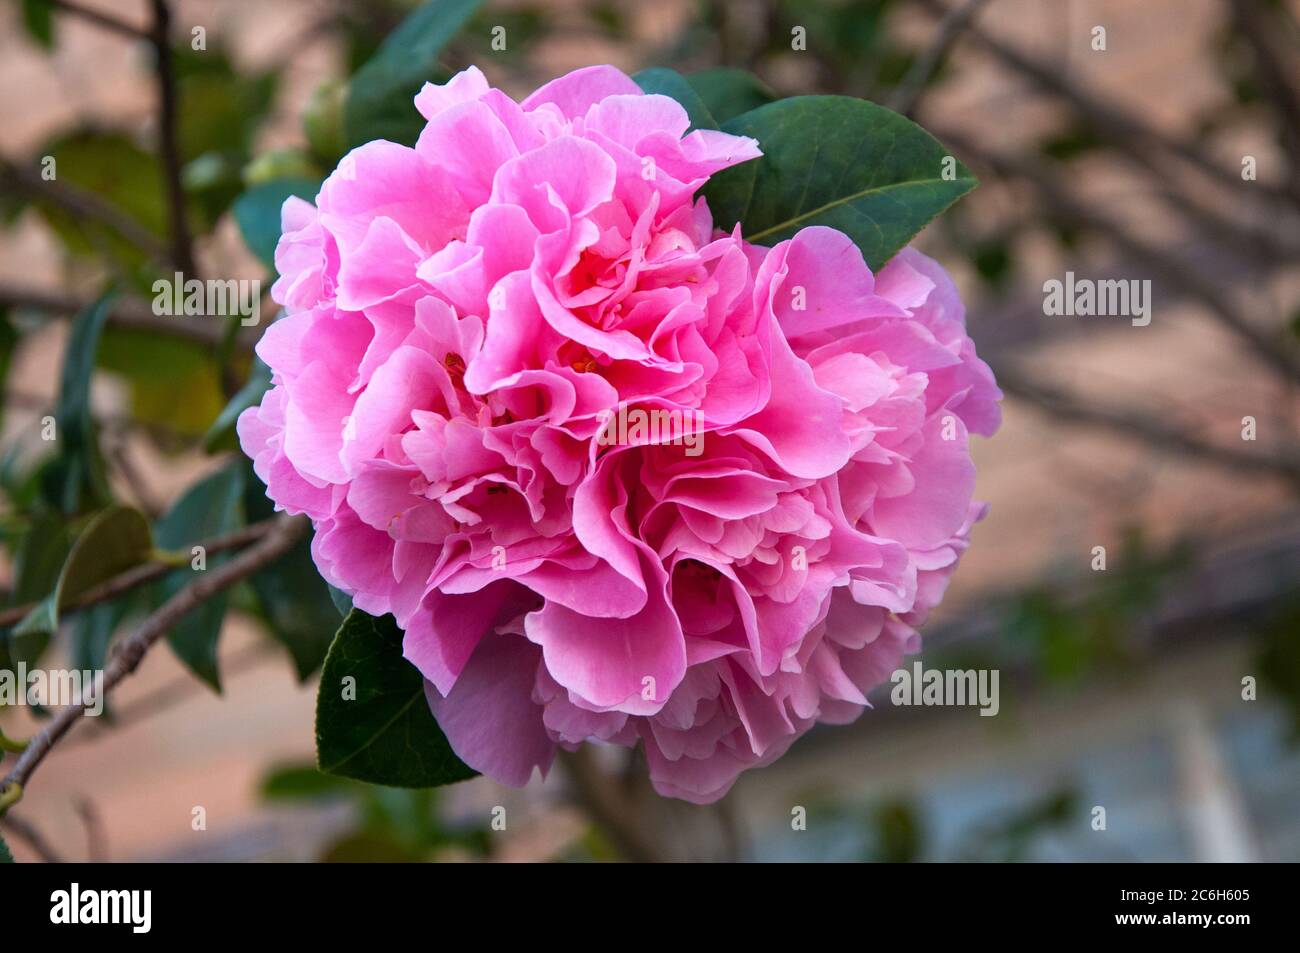 Double camellia, c. japonica, flowering in southeastern Australia Stock Photo